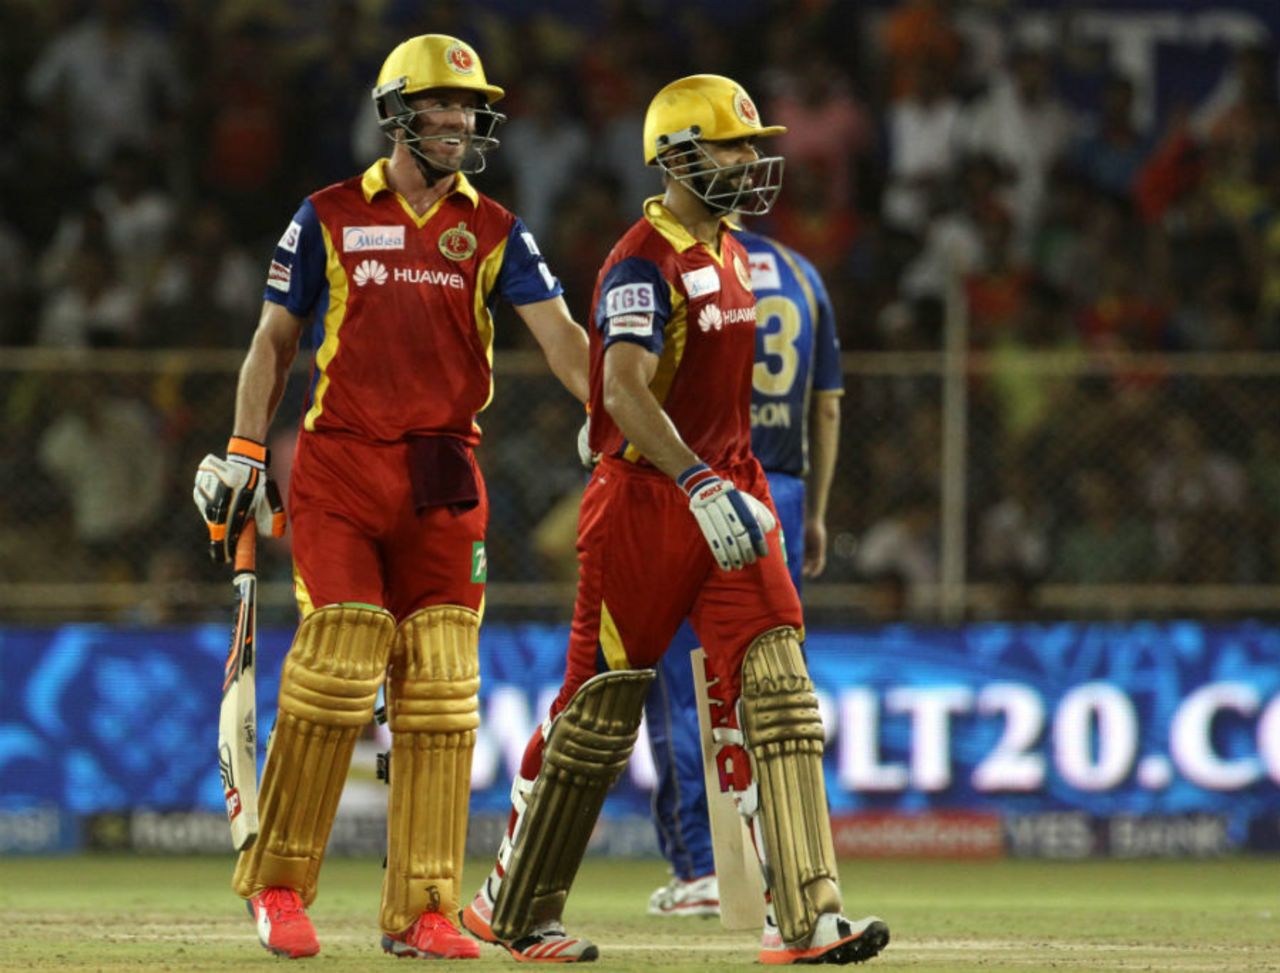 AB de Villiers and Virat Kohli put on an unbeaten 98 run stand, Rajasthan Royals v Royal Challengers Bangalore, IPL 2015, Ahmedabad, April 24, 2015